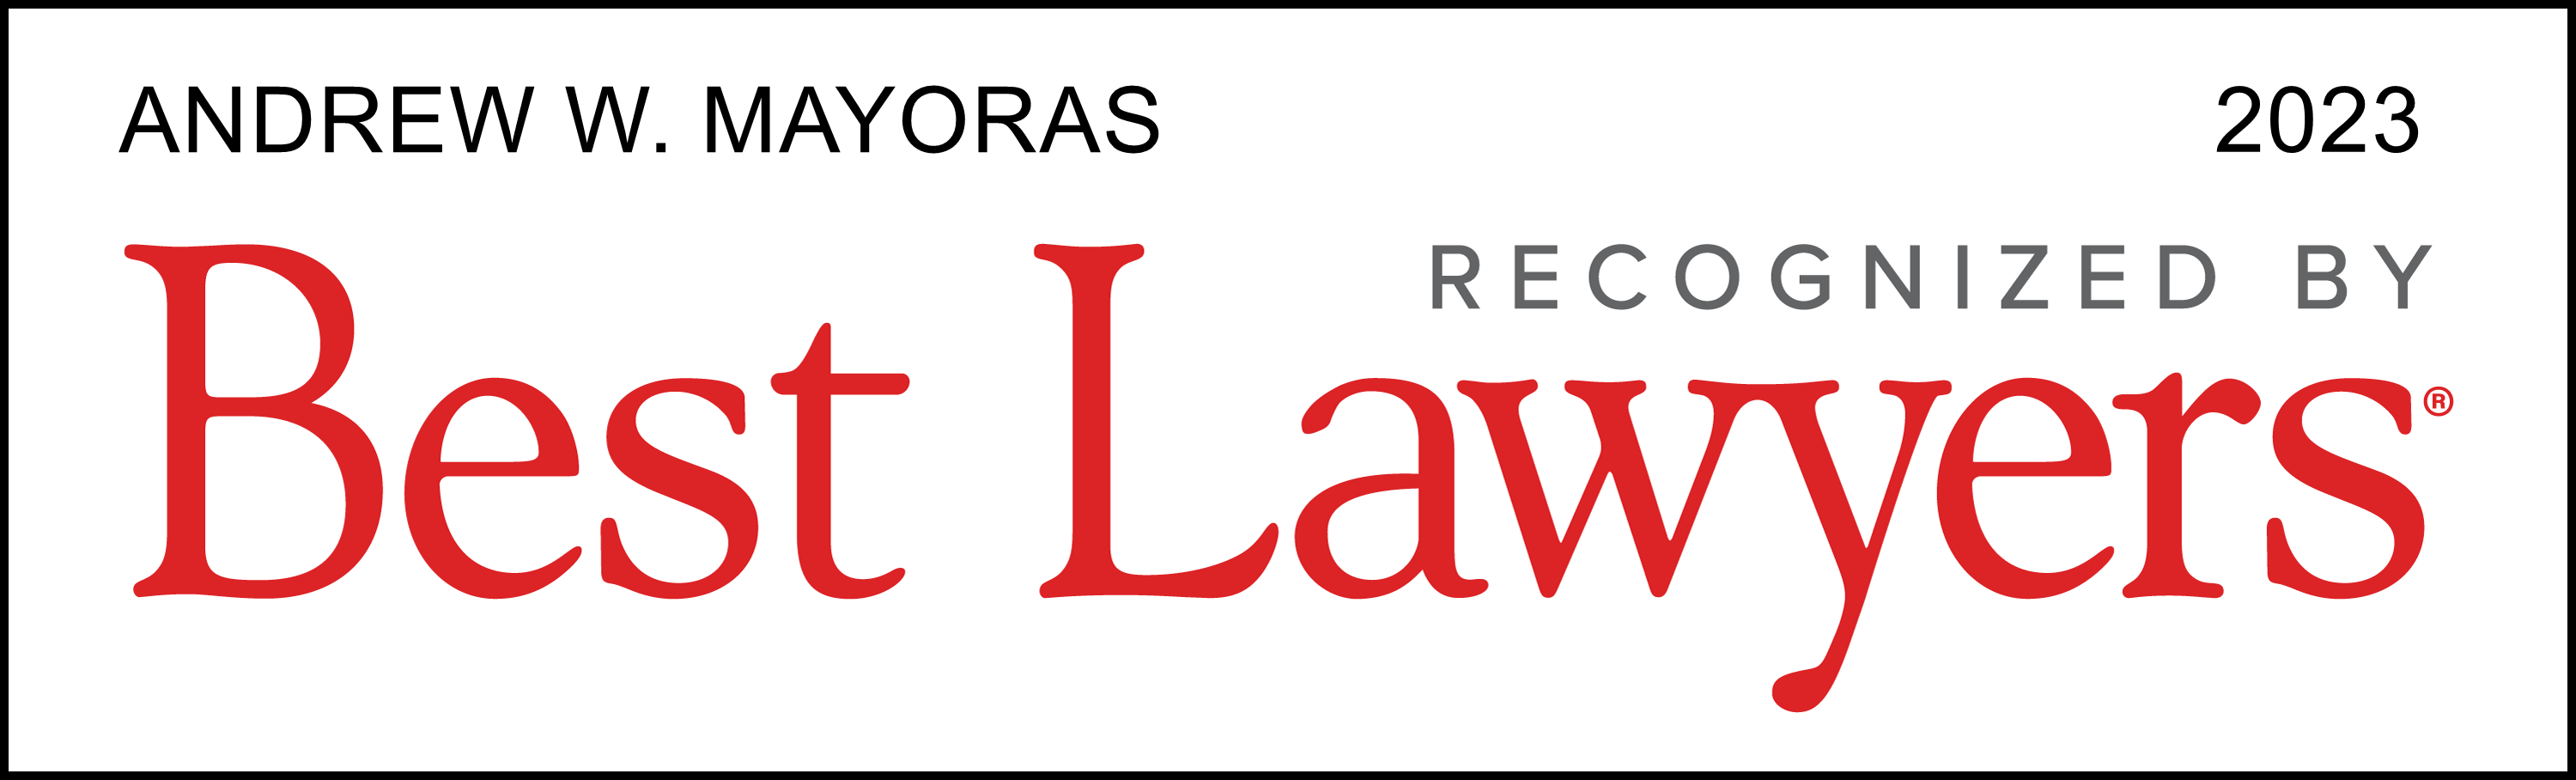 Best Lawyers Andrew logo 